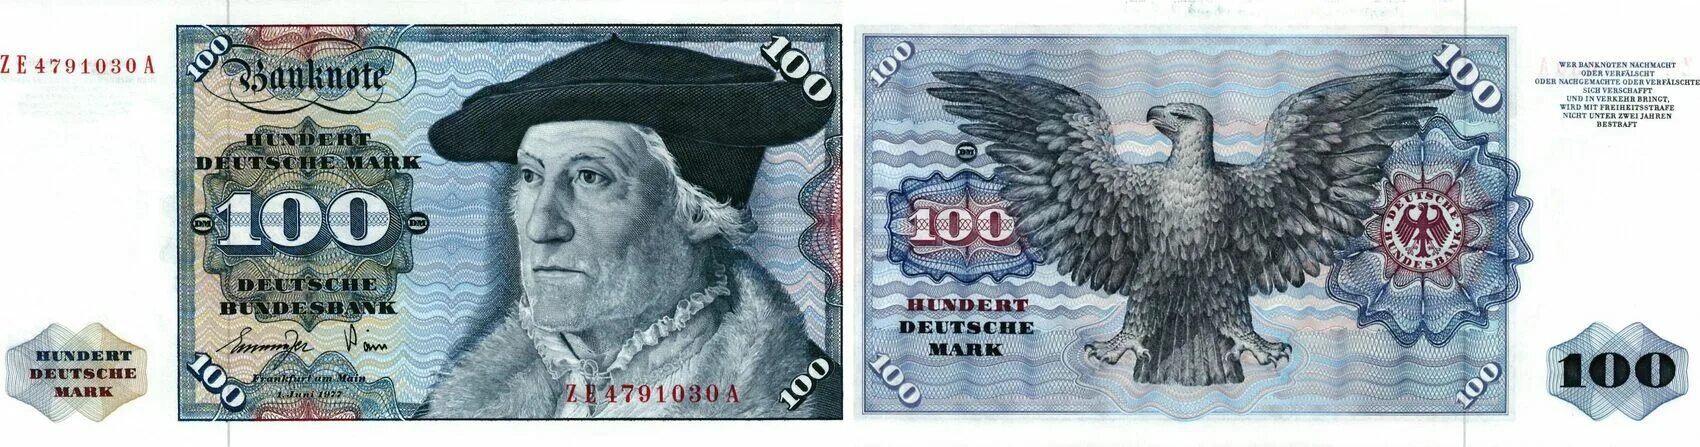 100 Дойч марок. Немецкая марка (Deutsche Mark). Дойч марки 1990 банкноты. 500 Дойч марок банкноты.